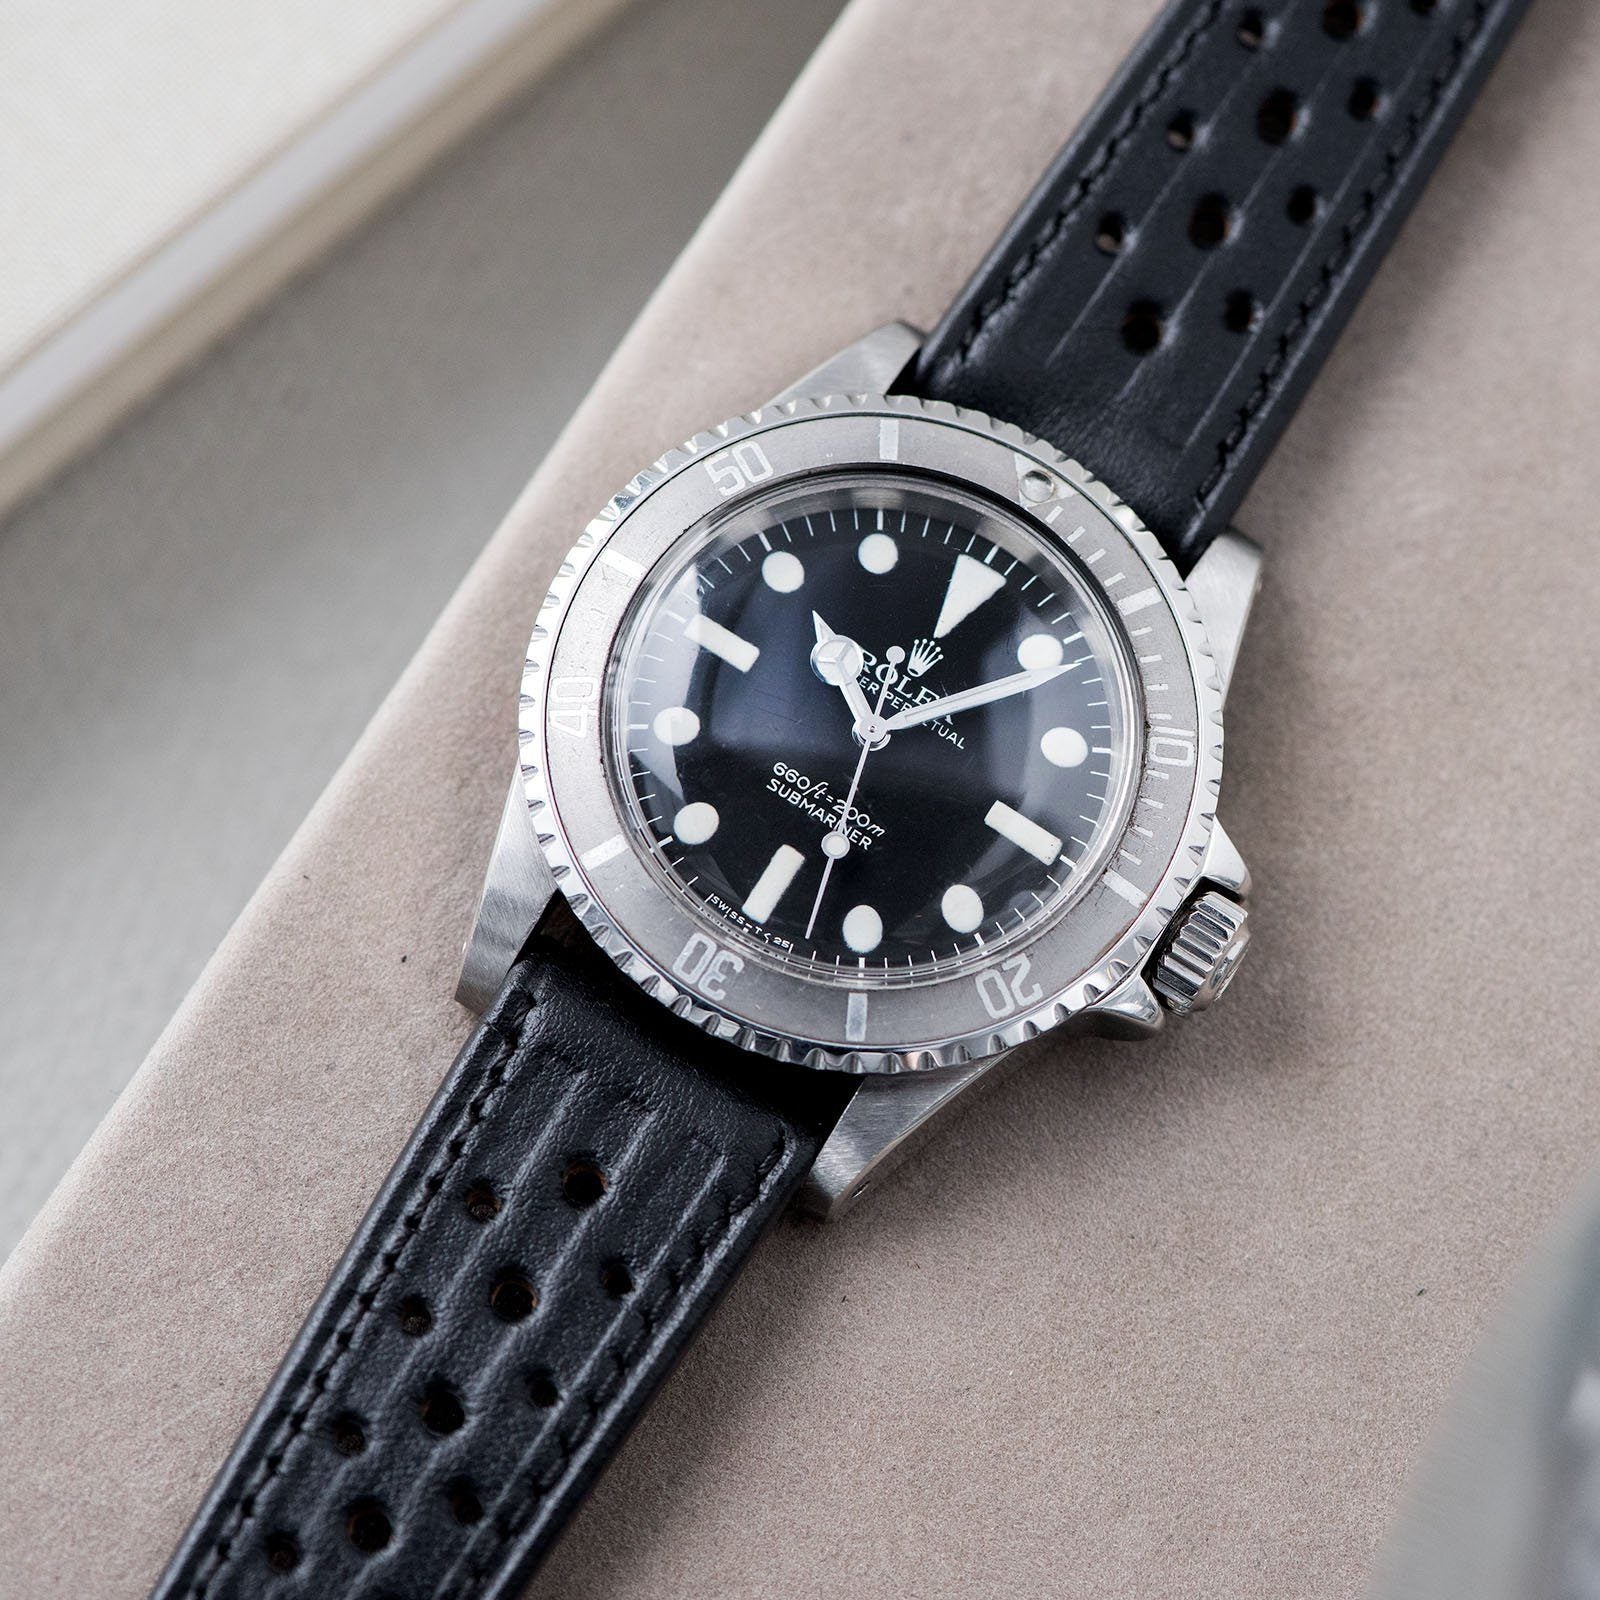 B&S Racing Black Speedy Leather Watch Strap on a Rolex 5513 submariner